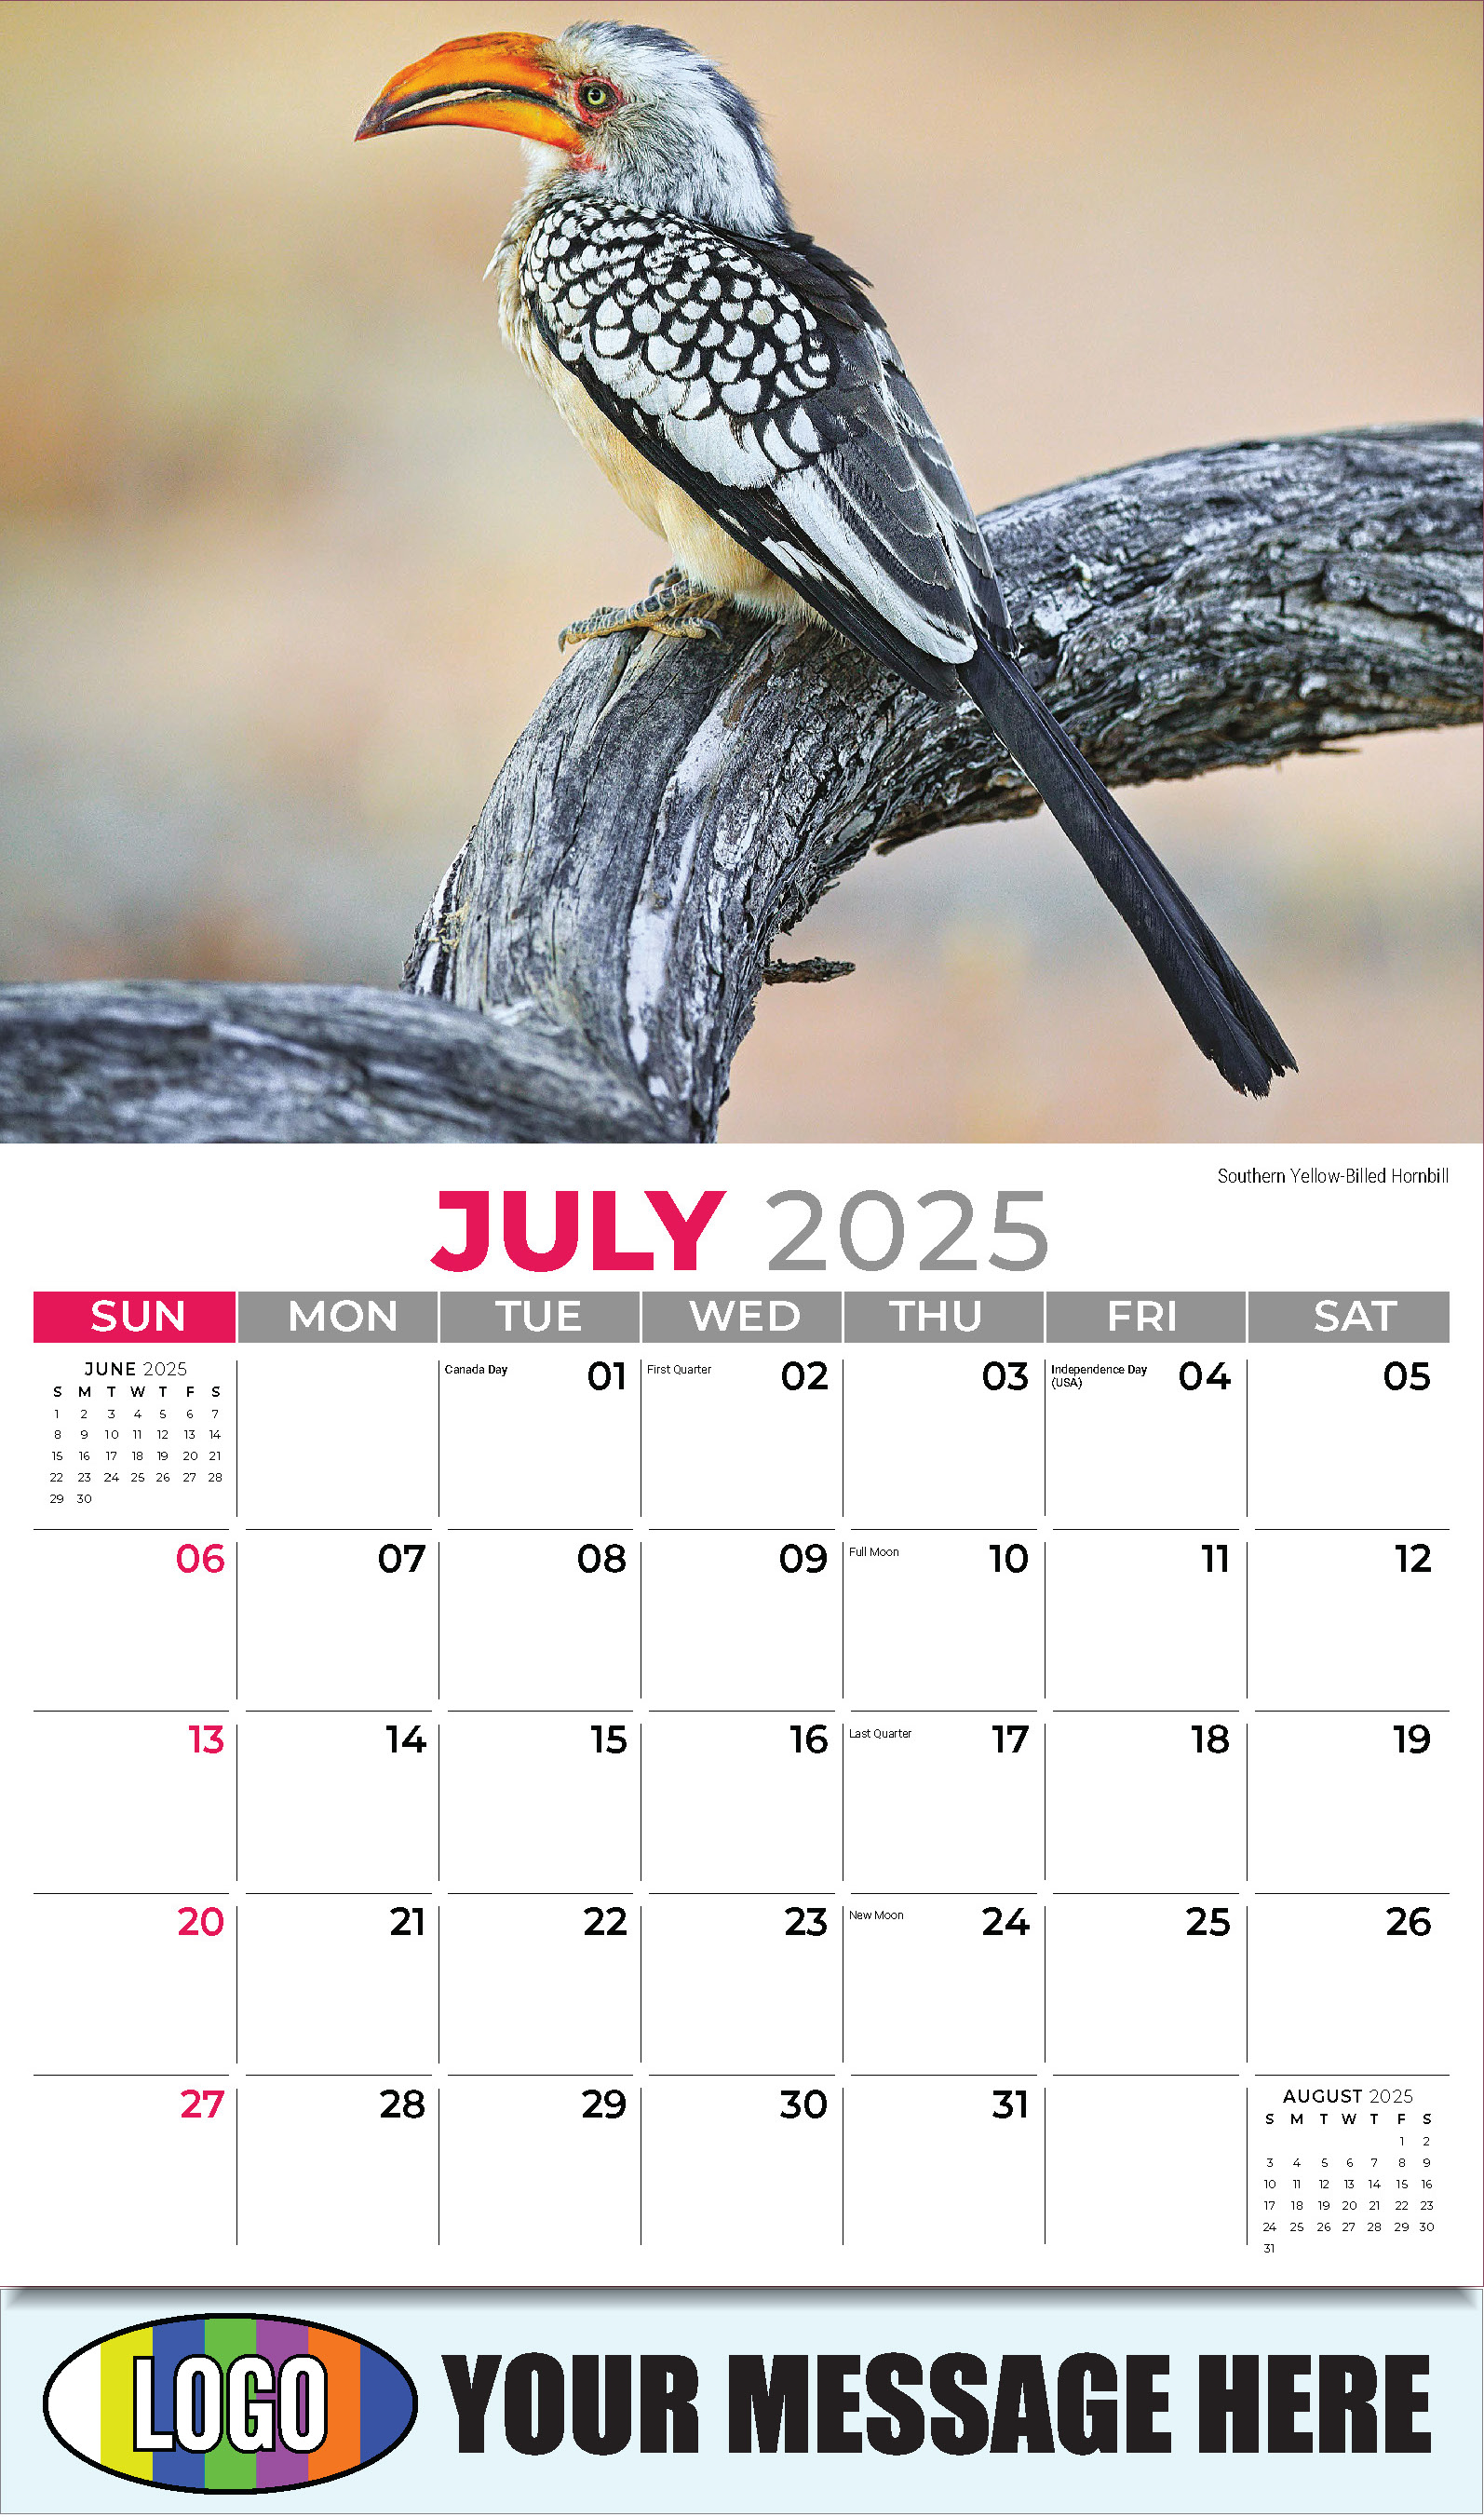 International Wildlife 2025 Business Advertising Wall Calendar - July